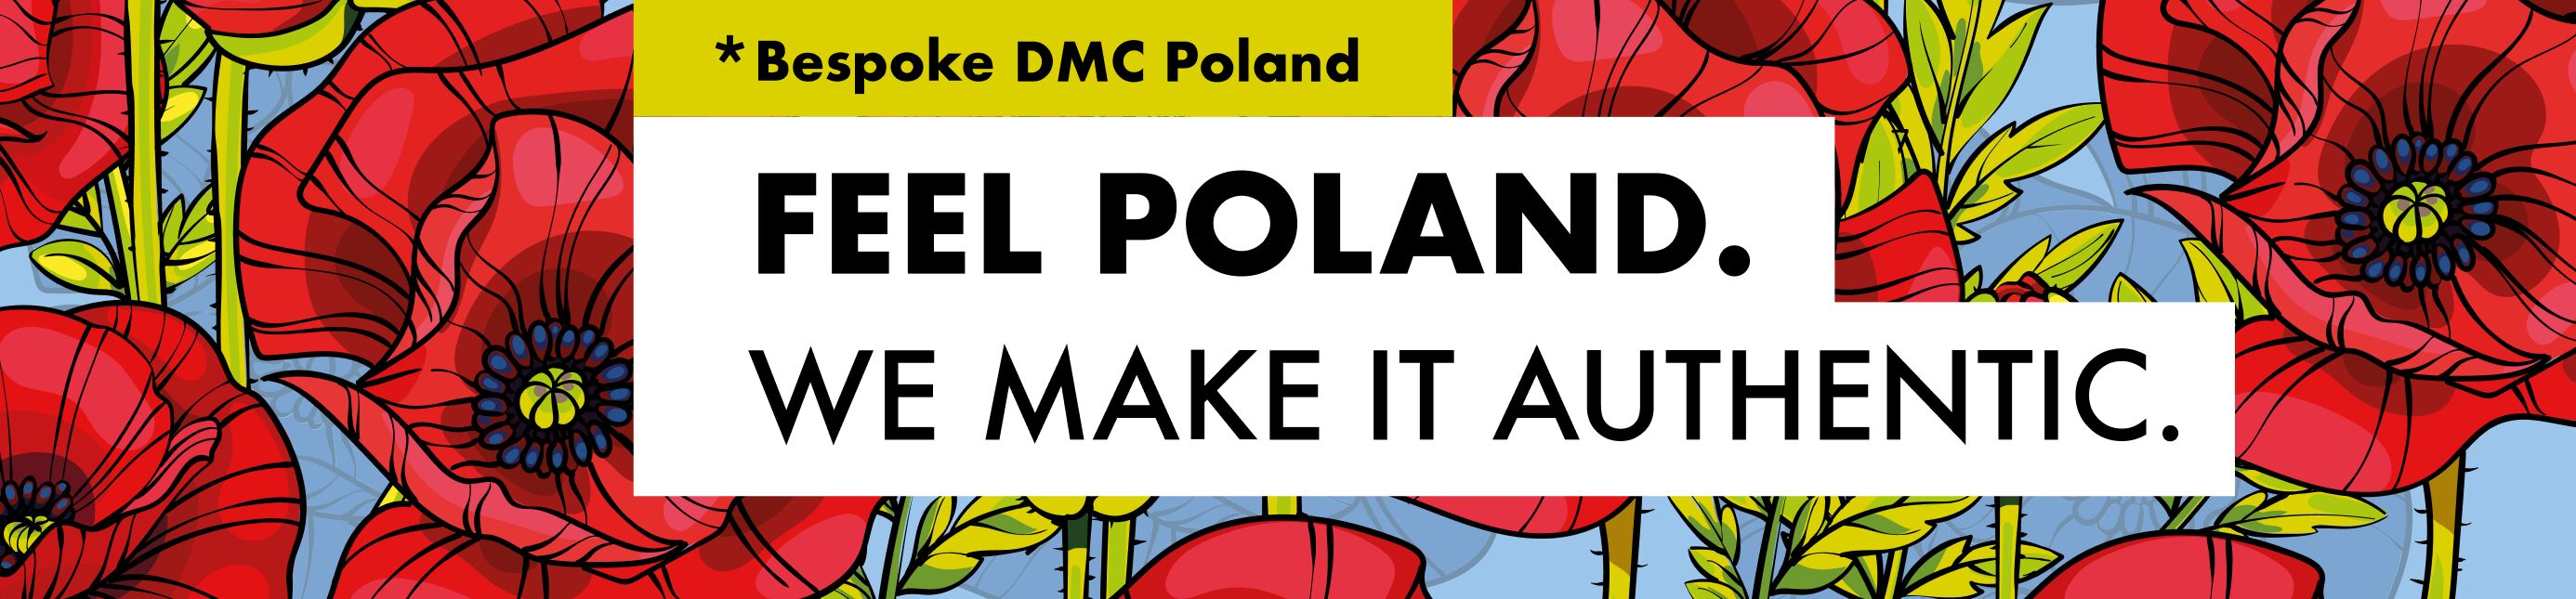 *Bespoke DMC Poland - Feel Poland. We make it authentic.